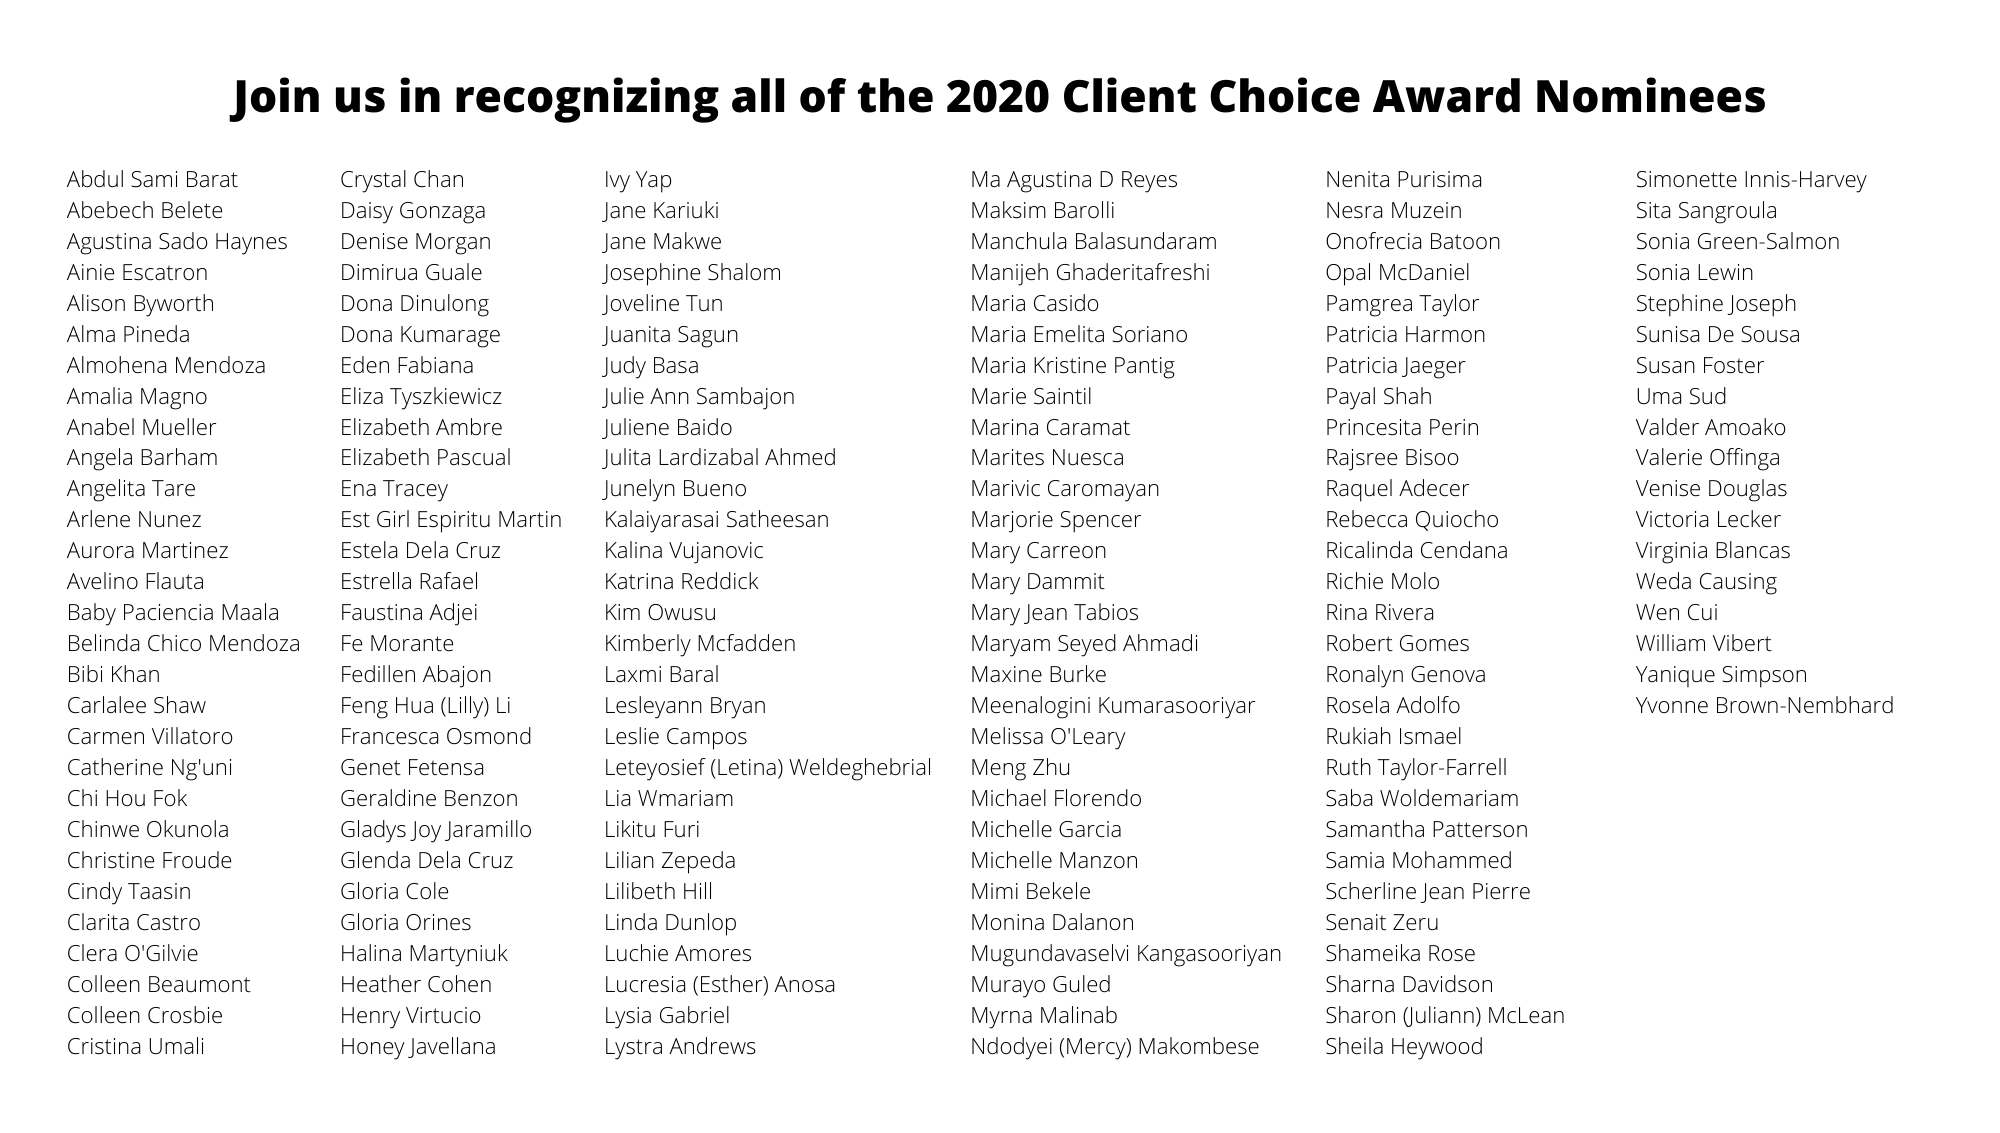 List of Client Choice Award Nominees 2020